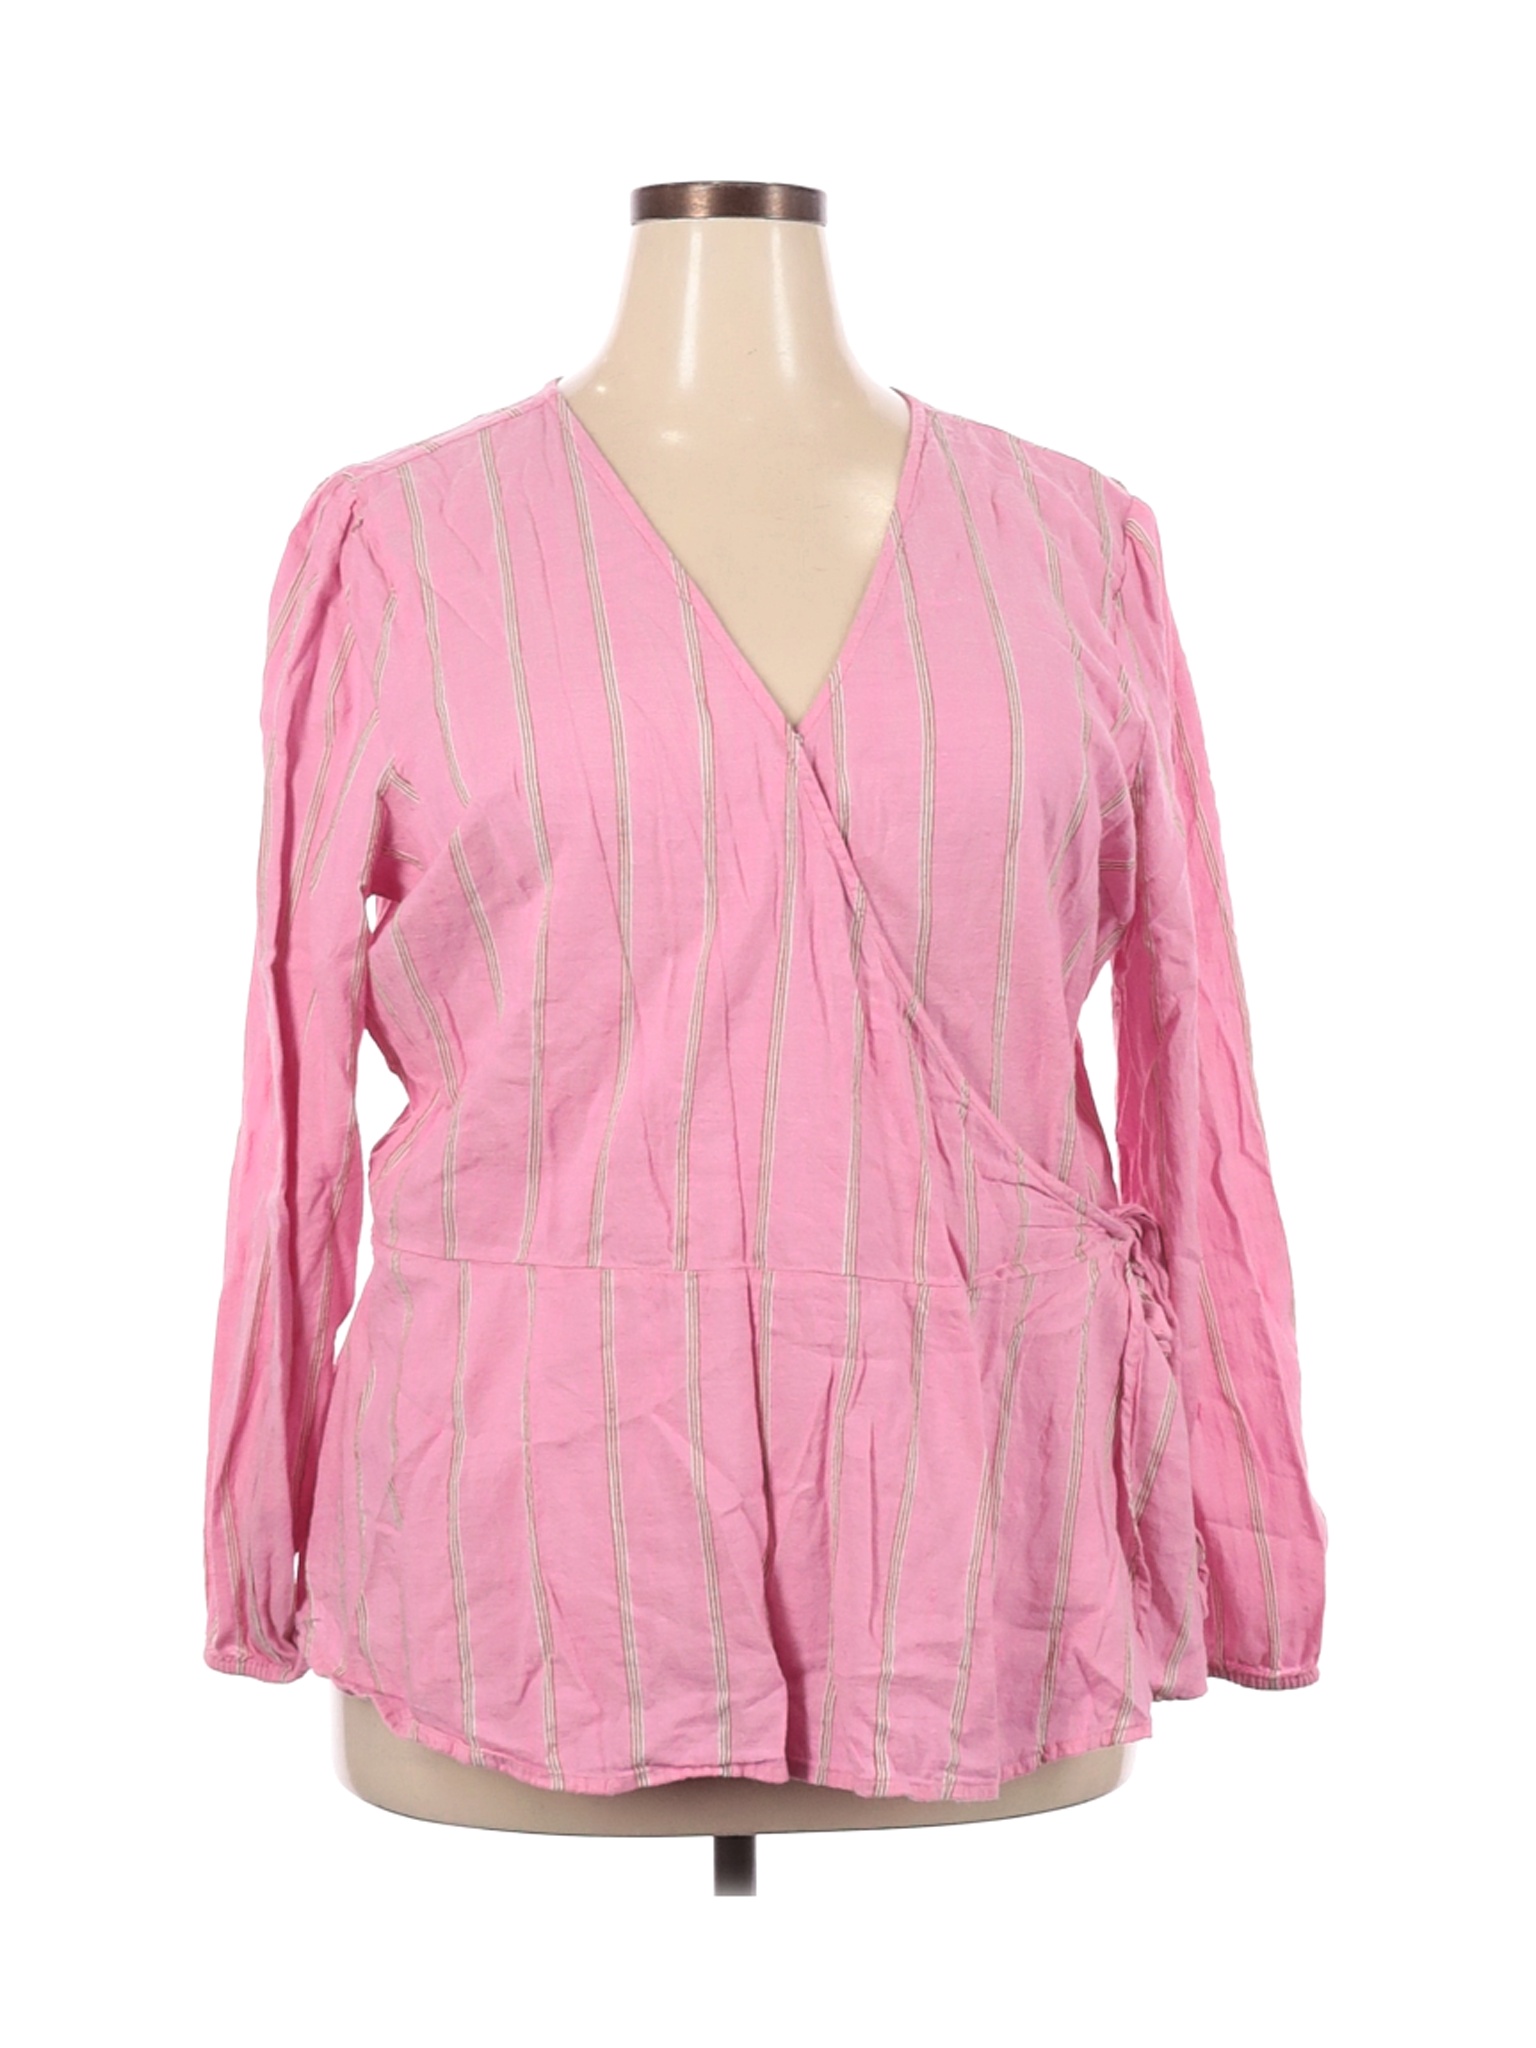 Old Navy Women Pink Long Sleeve Blouse XXL Tall | eBay